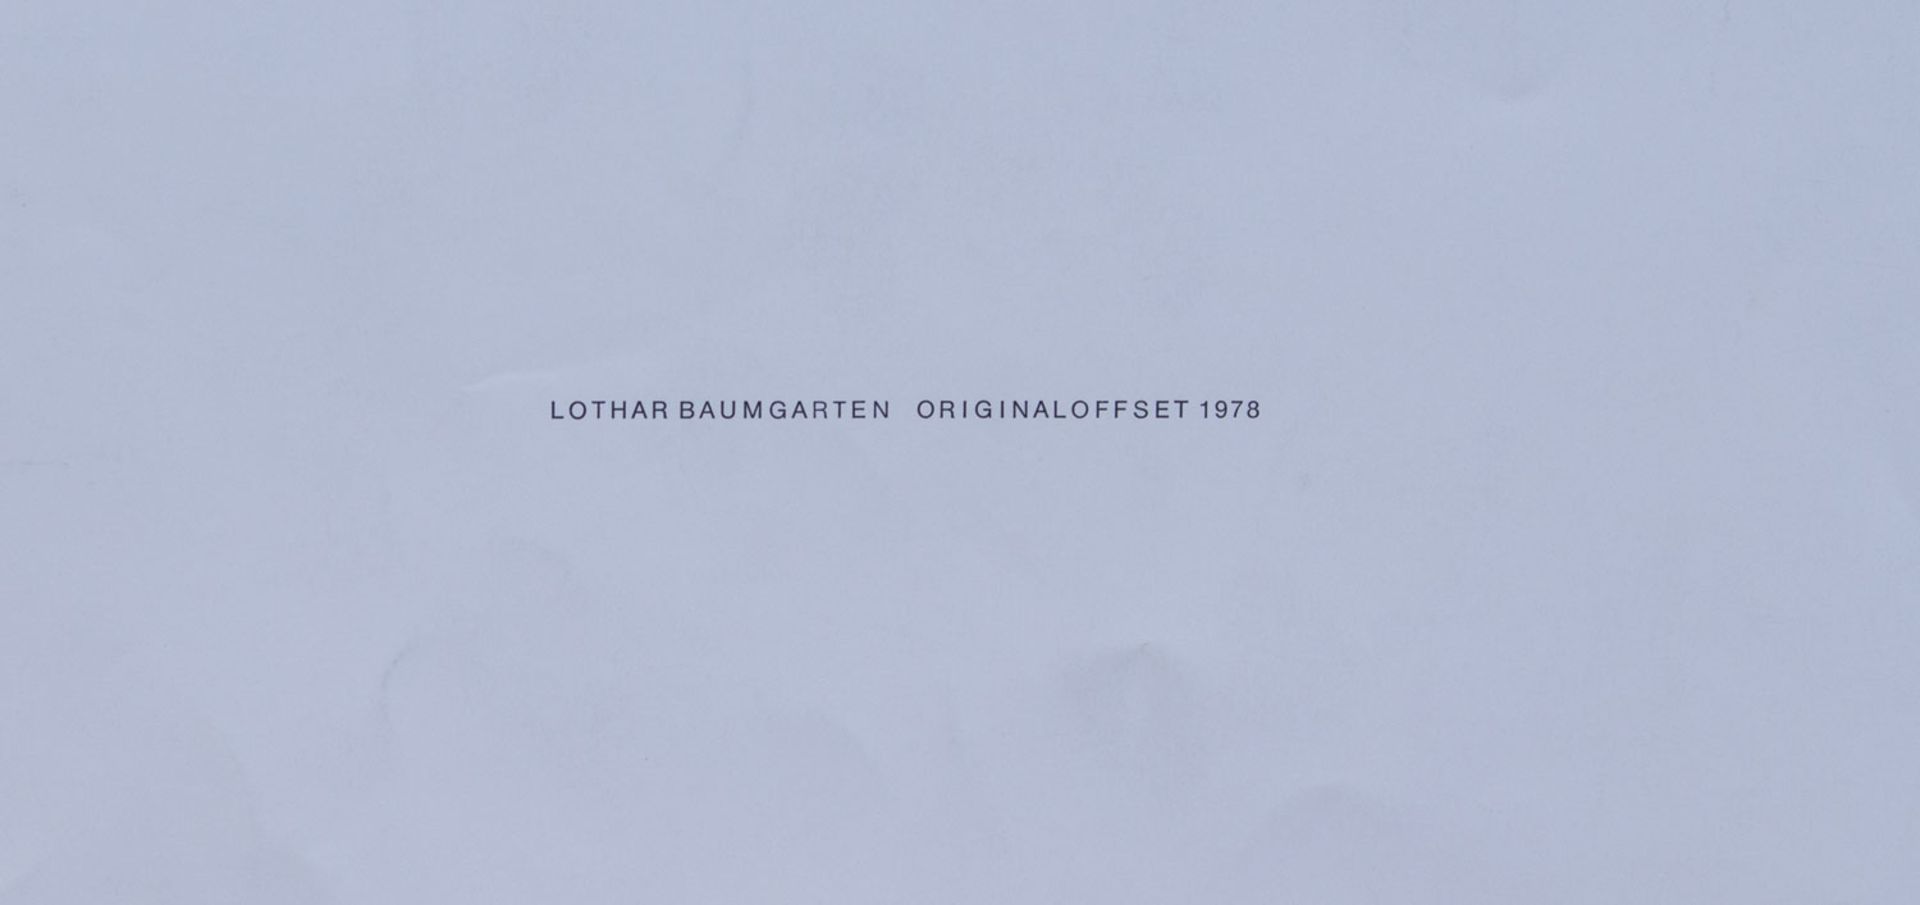 Lothar Baumgarten - Image 2 of 2